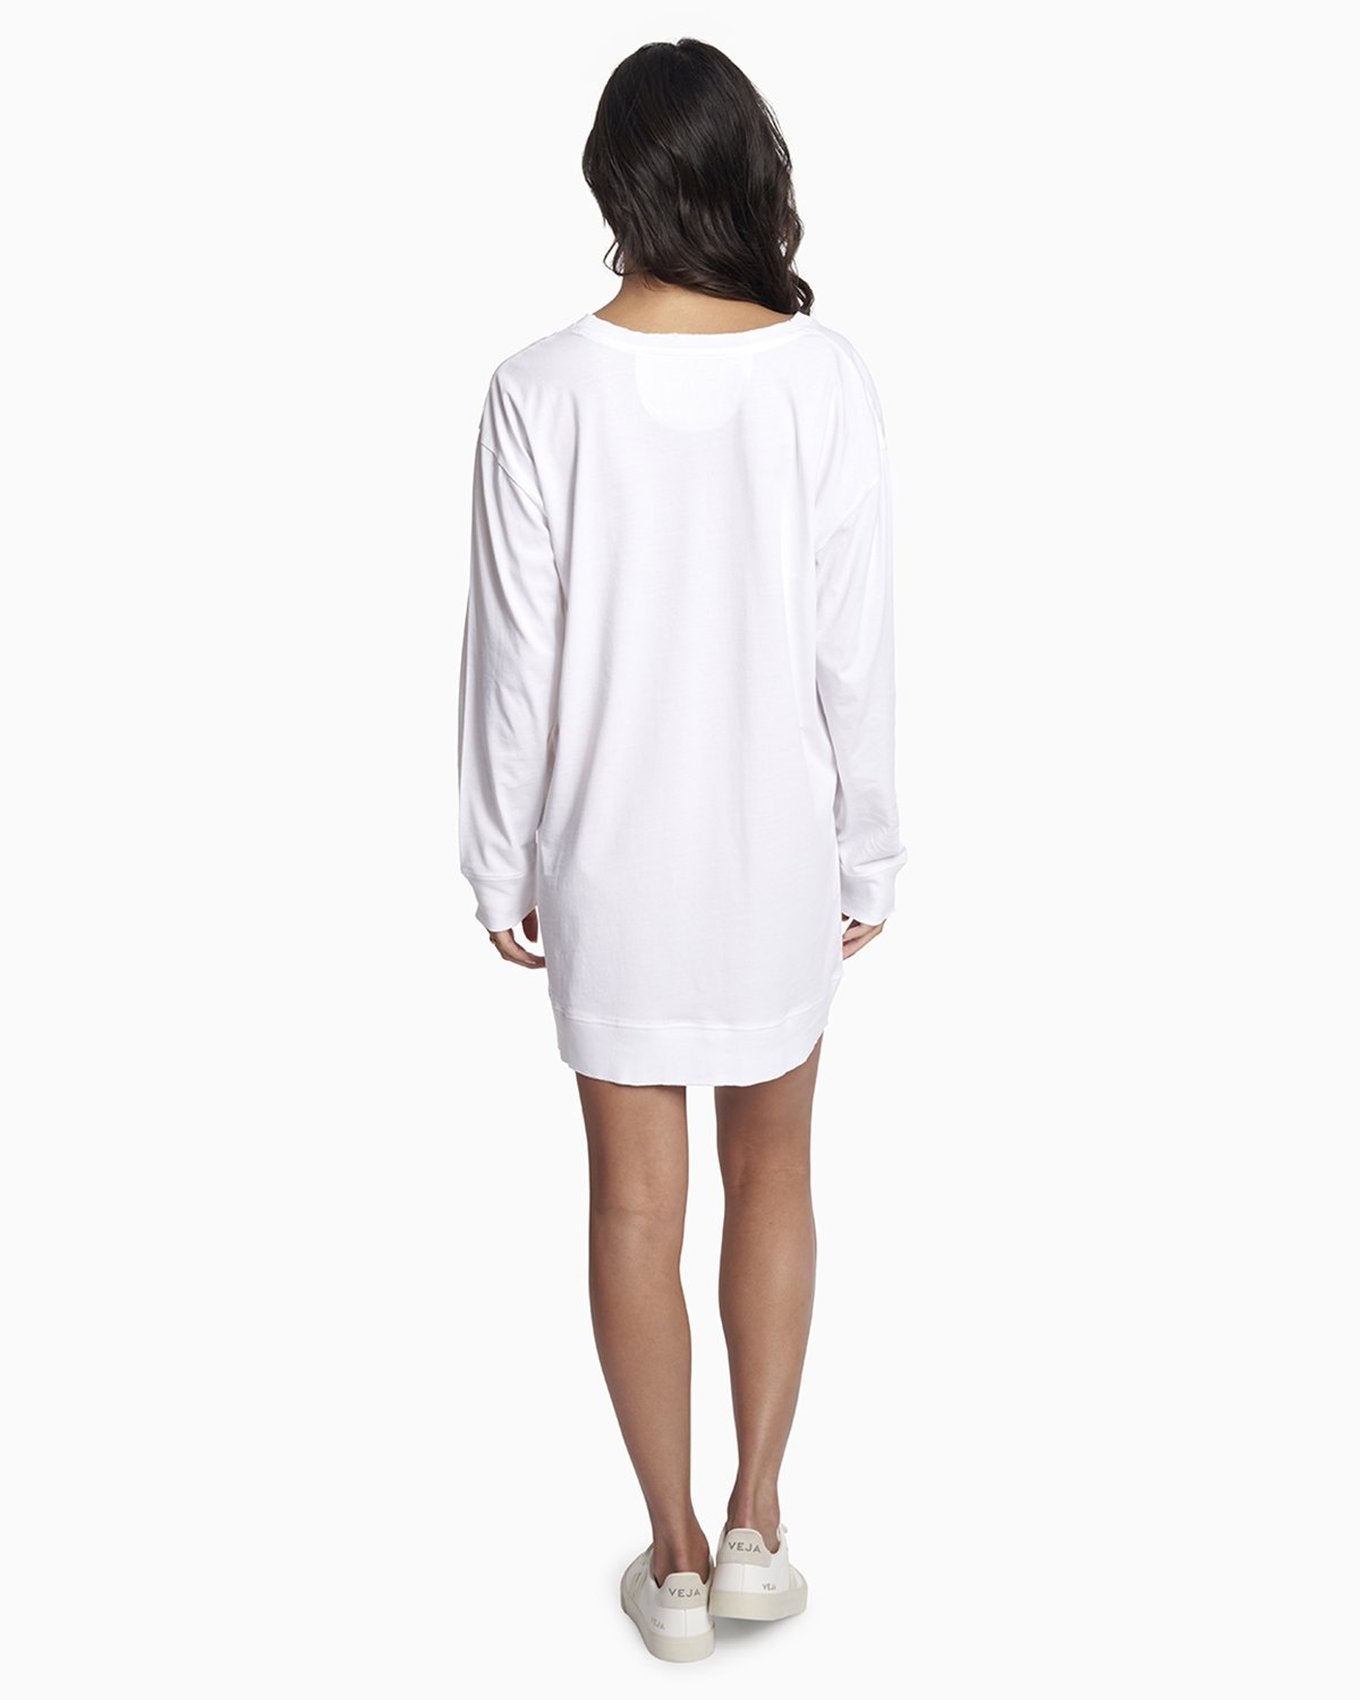 YesAnd Organic Long Sleeve Tee Shirt Dress Tee Shirt Dress in color Bright White and shape sheath